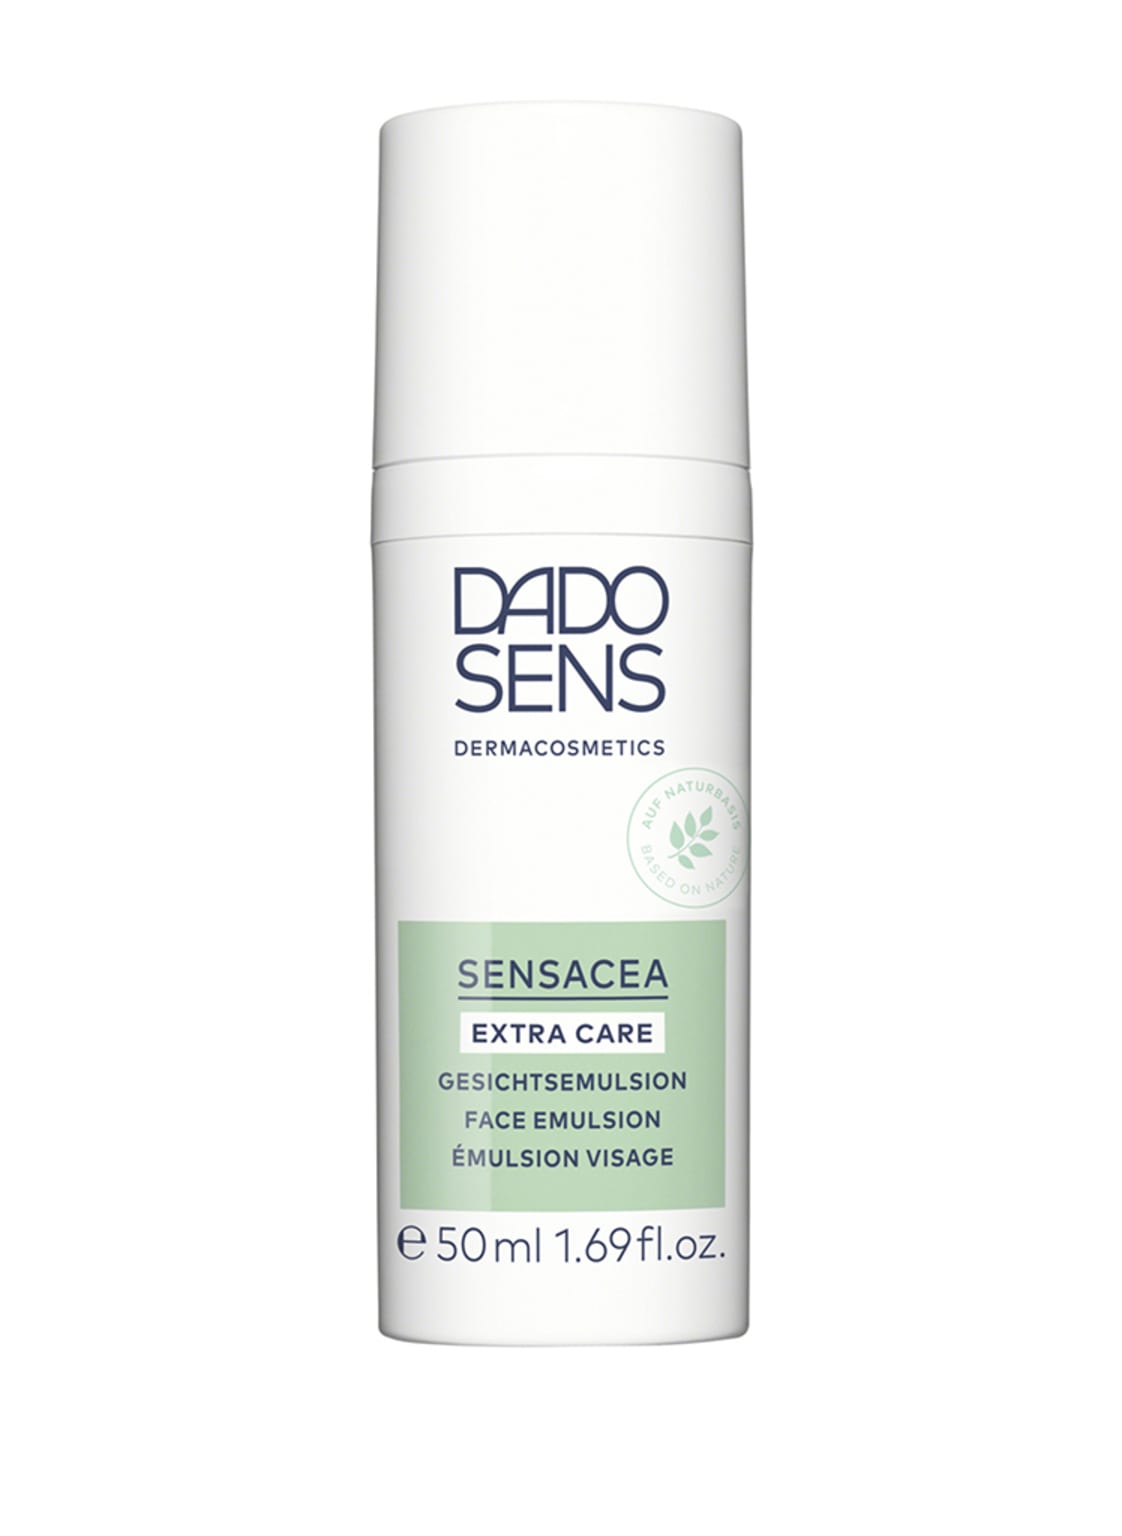 Dado Sens Sensacea Extra Care Gesichtsemulsion 50 ml von DADO SENS